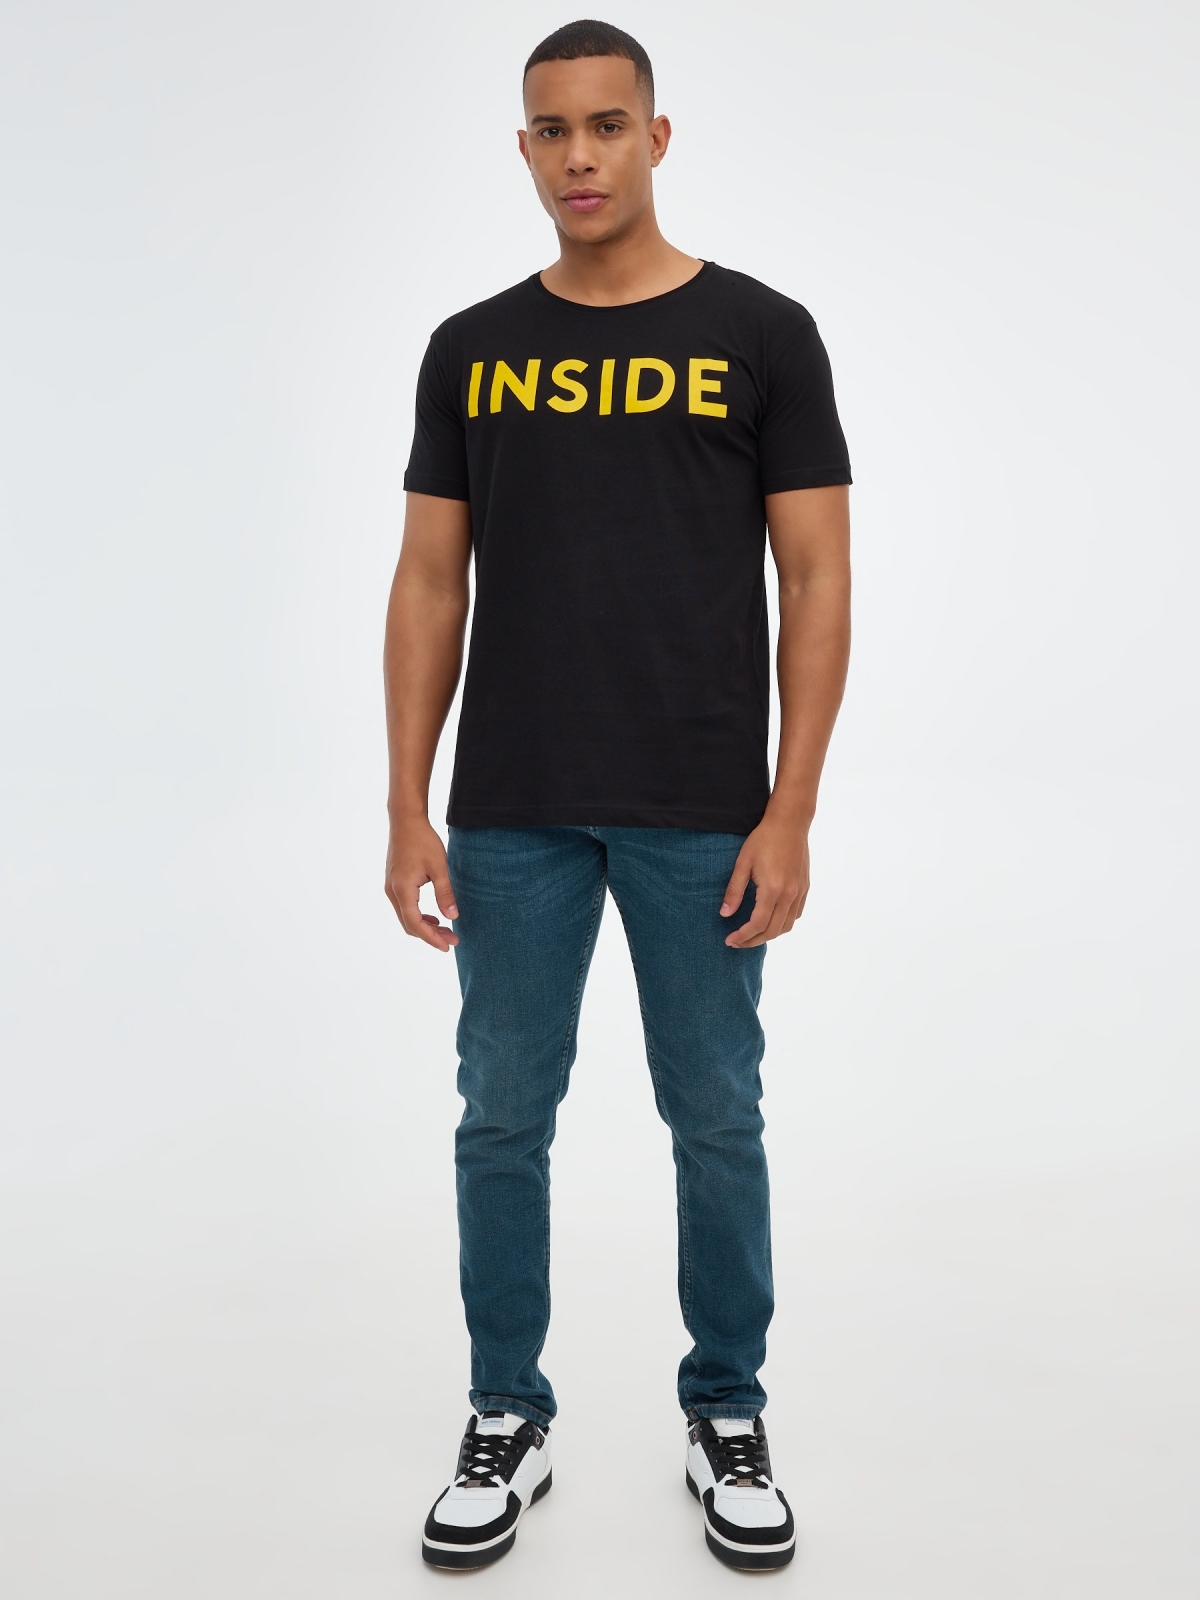 Camiseta básica "INSIDE" negro vista general frontal